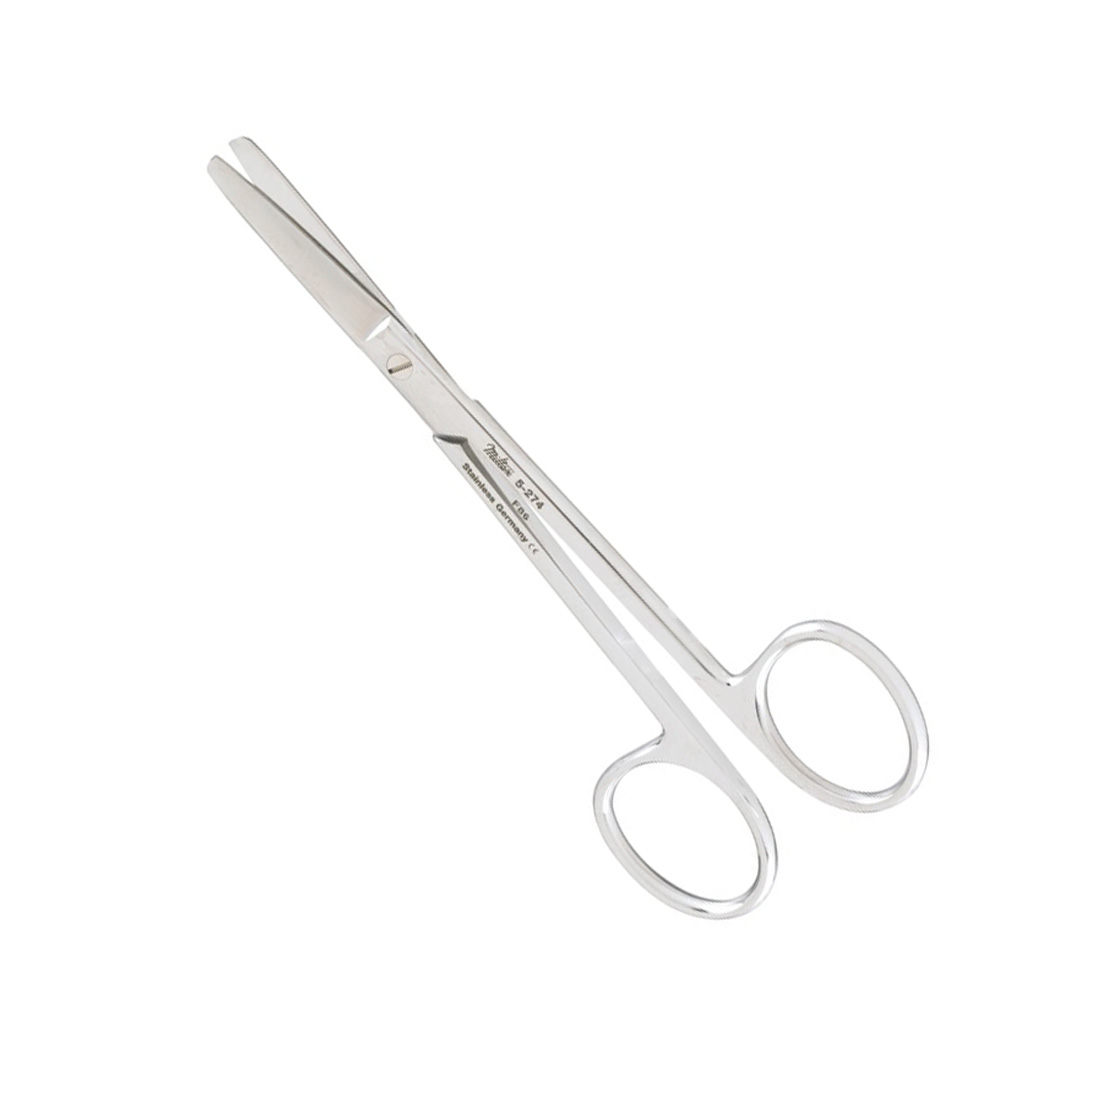 Wagner Plastic Surgery Scissors, Straight,  Blunt-Blunt Points